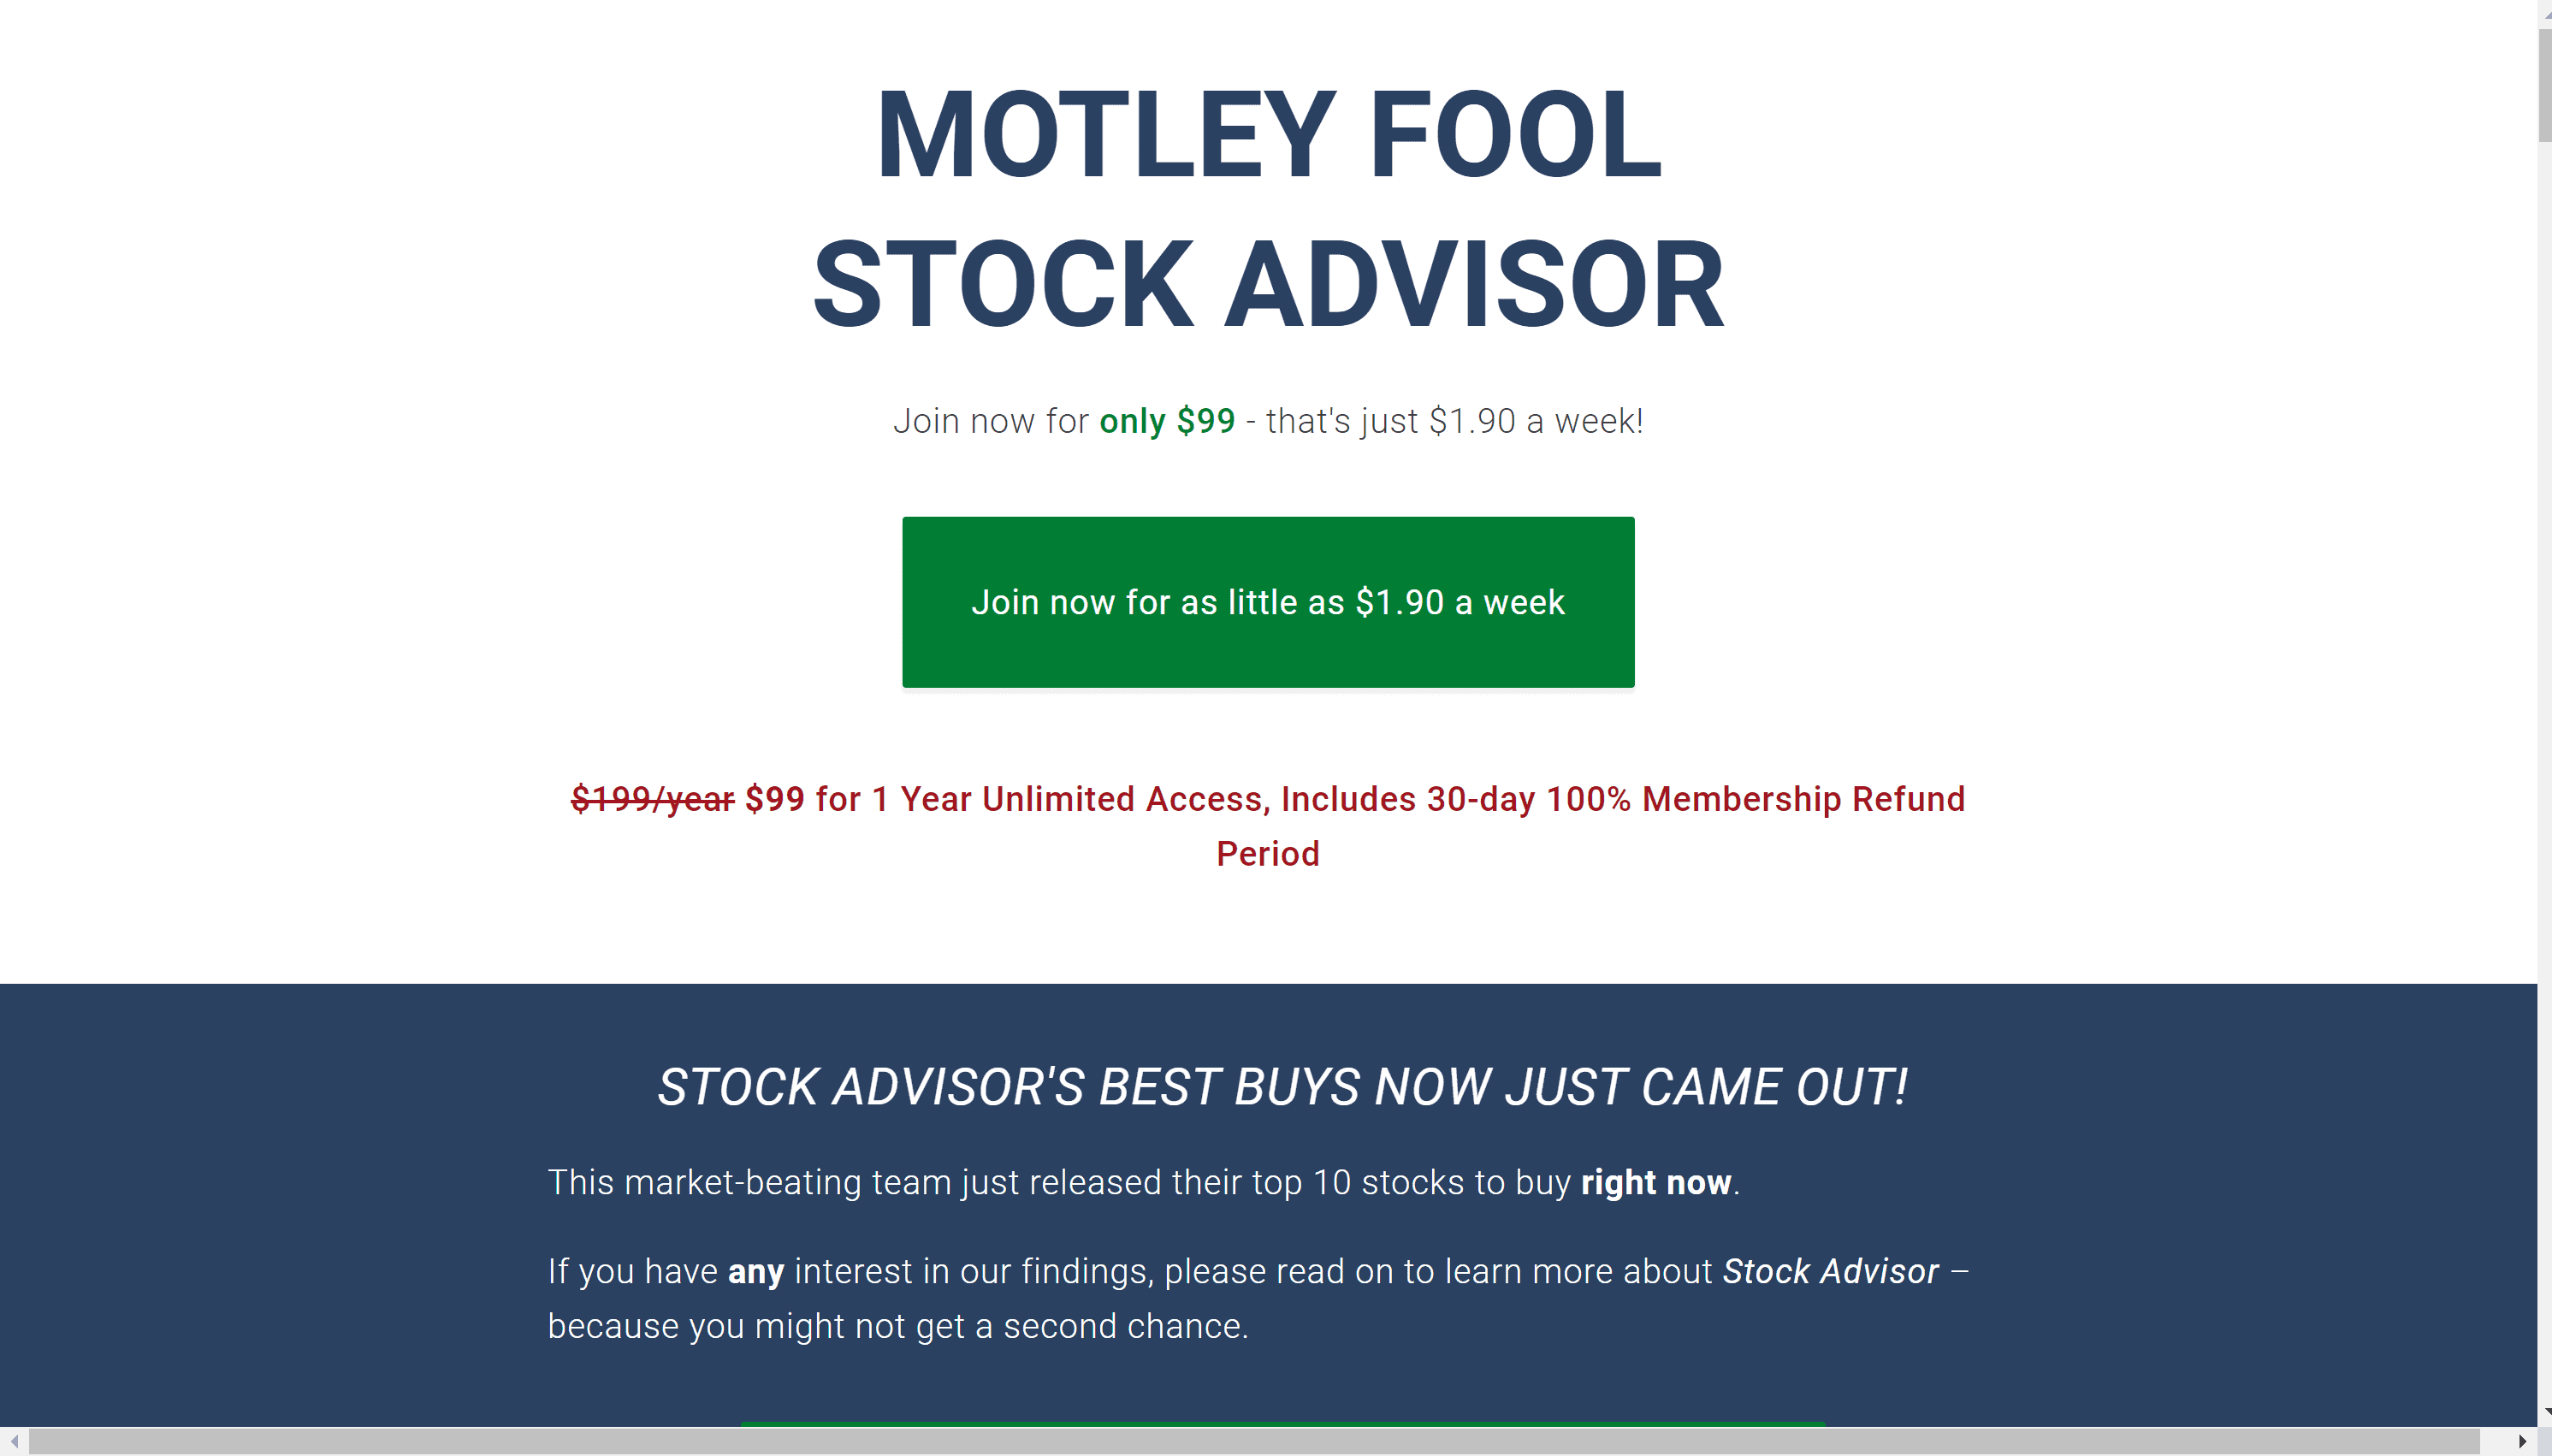 Motley fool pricing - Motley Fool stock advisor